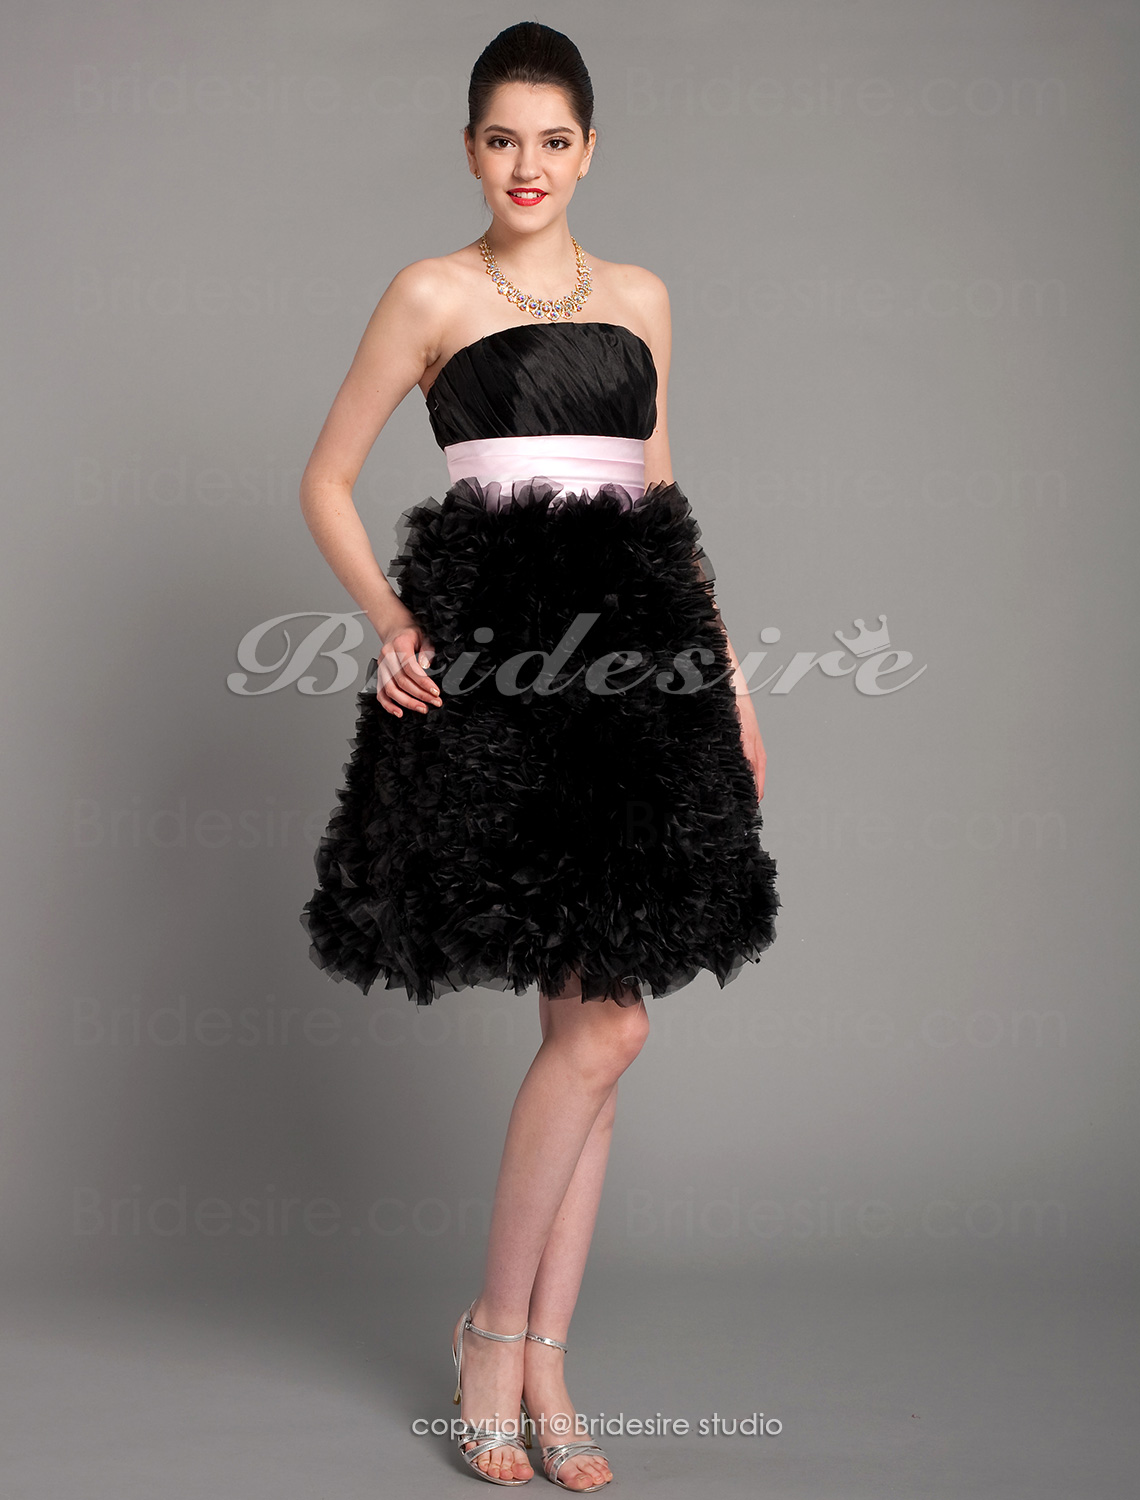 A-line Organza Knee-length Bridesmaid Dress With Ruffles